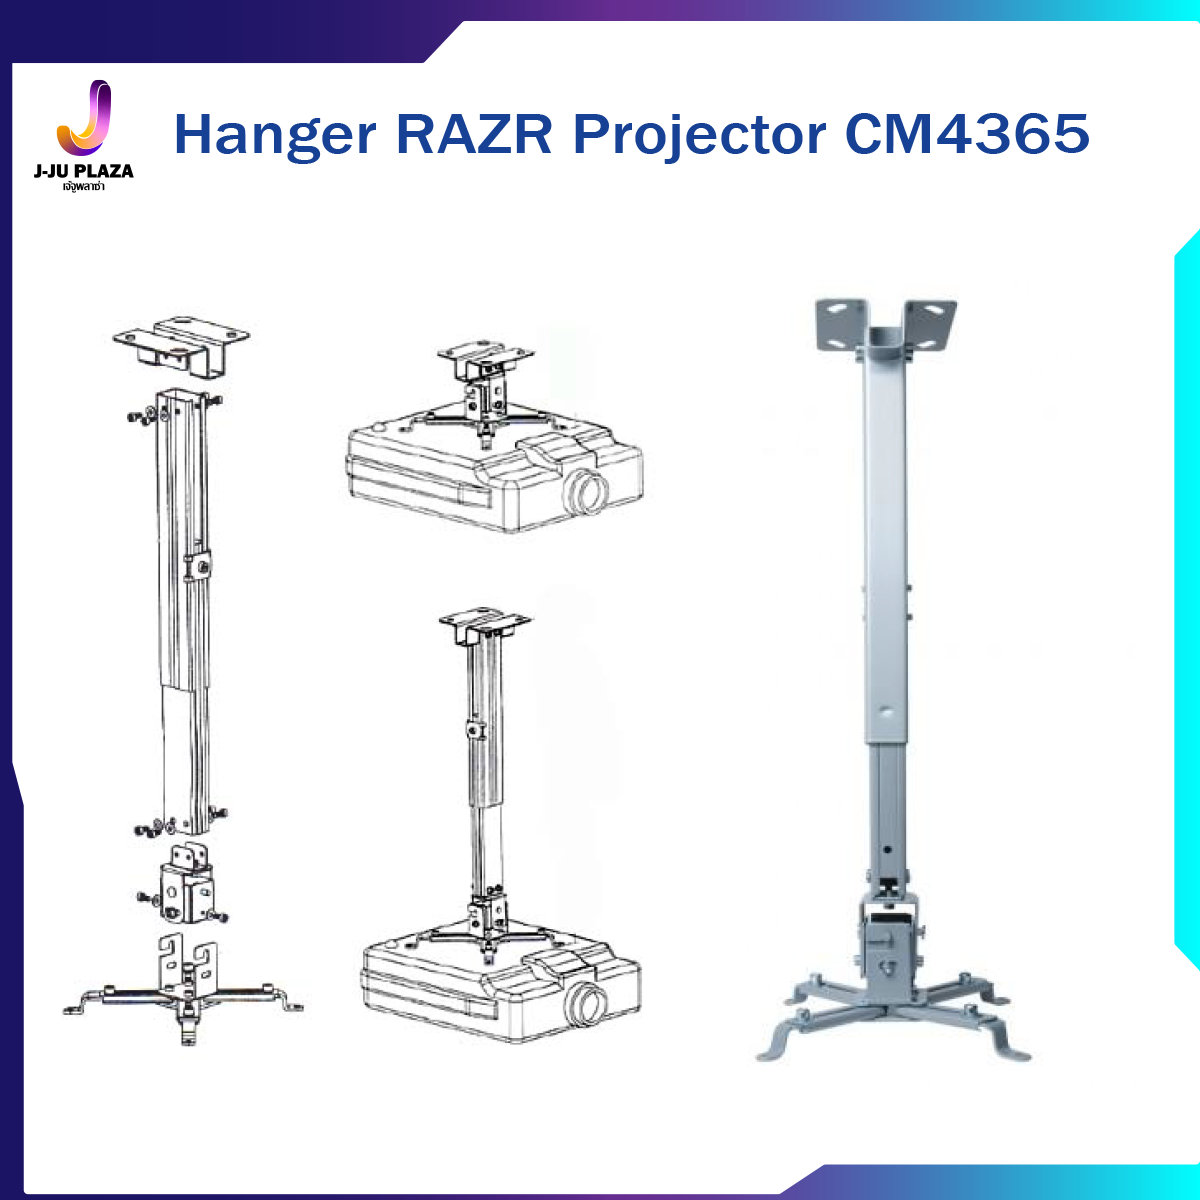 Hanger RAZR ขาแขวน Projector CM4365 ความยาว 43 ซ.ม. ปรับความยาวได้สูงสุด 65 ซ.ม.